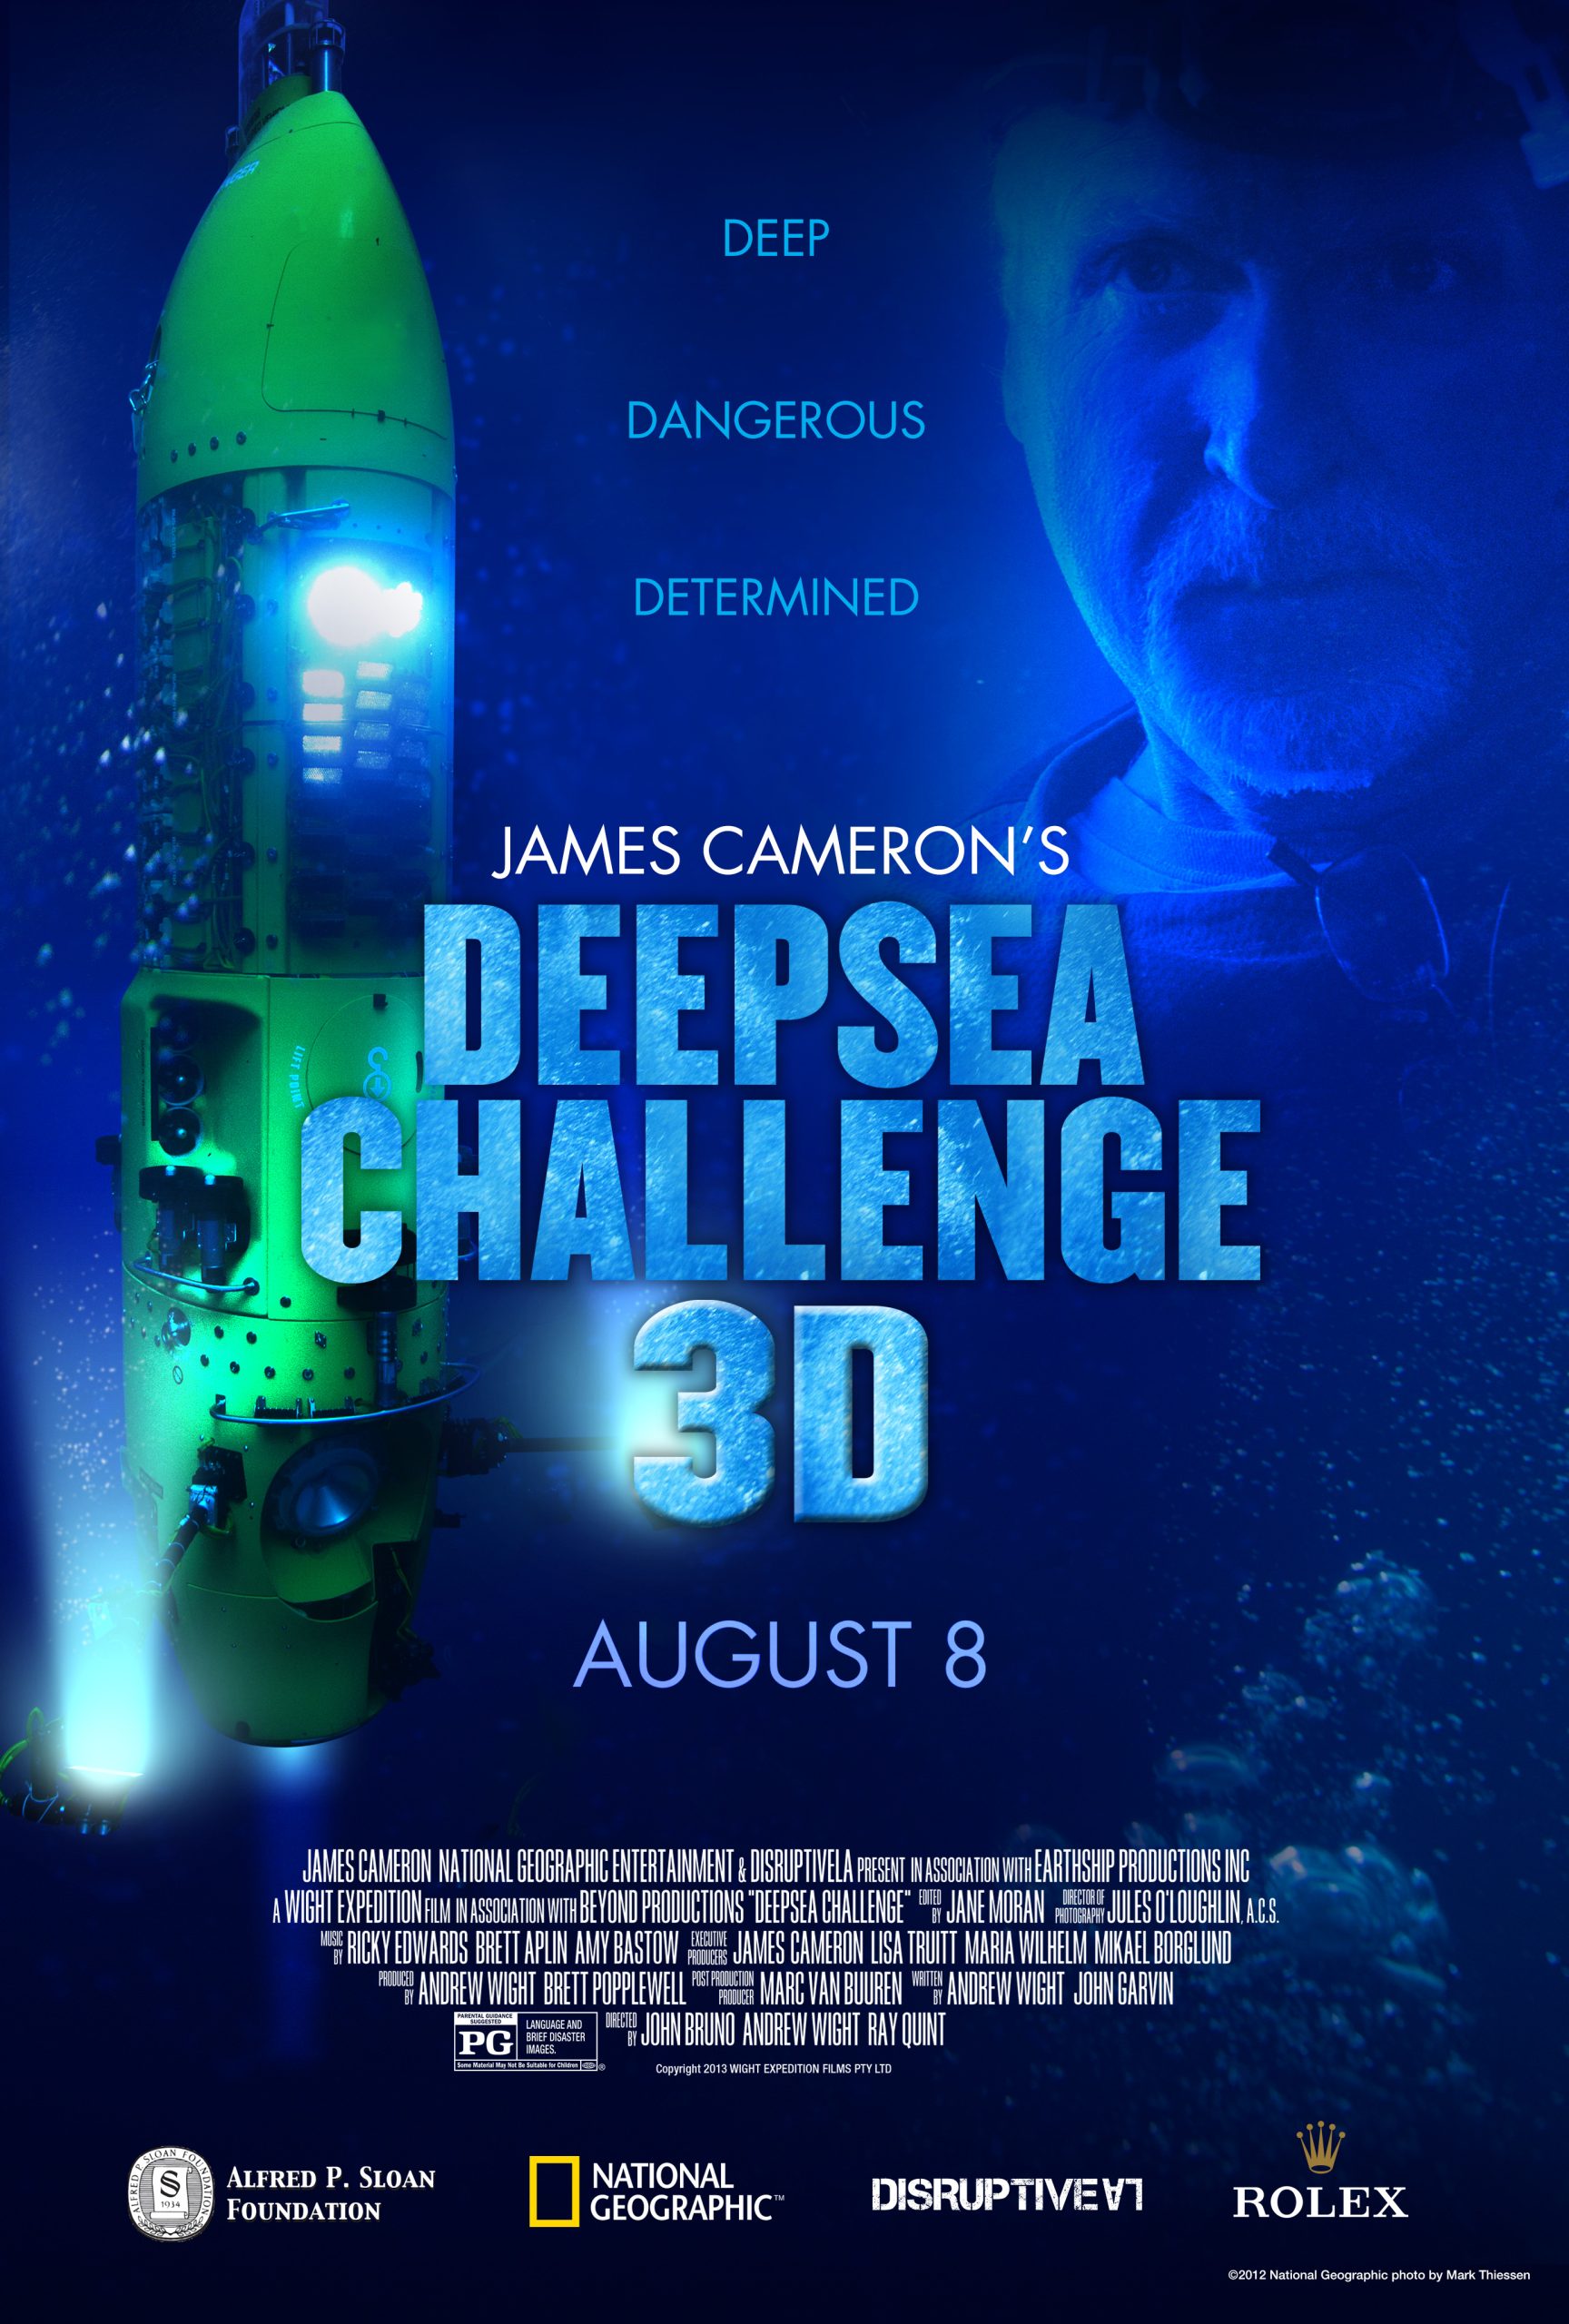 Deepsea Challenge (2014) ดิ่งระทึกลึกสุดโลก James Cameron